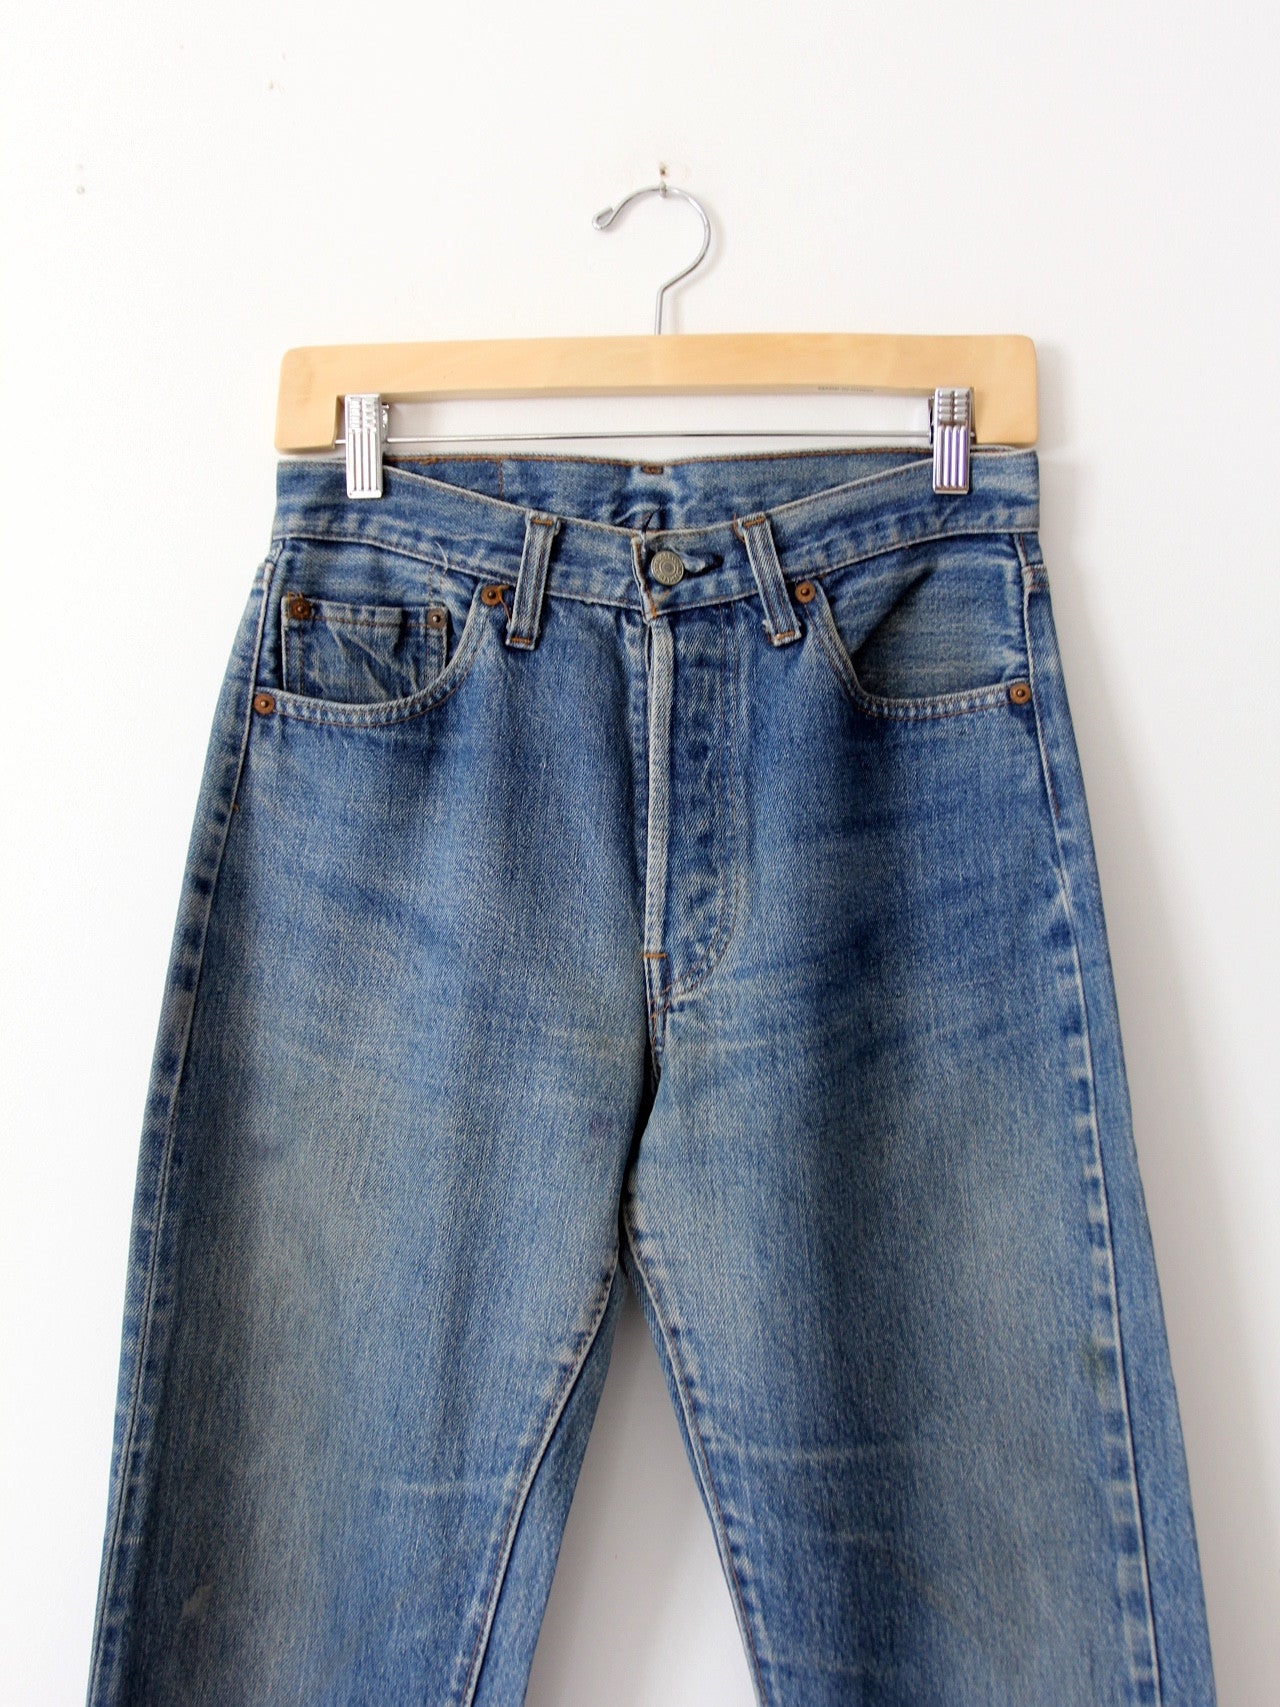 vintage Levi's 501 red line selvedge jeans, 29 x 31 – 86 Vintage